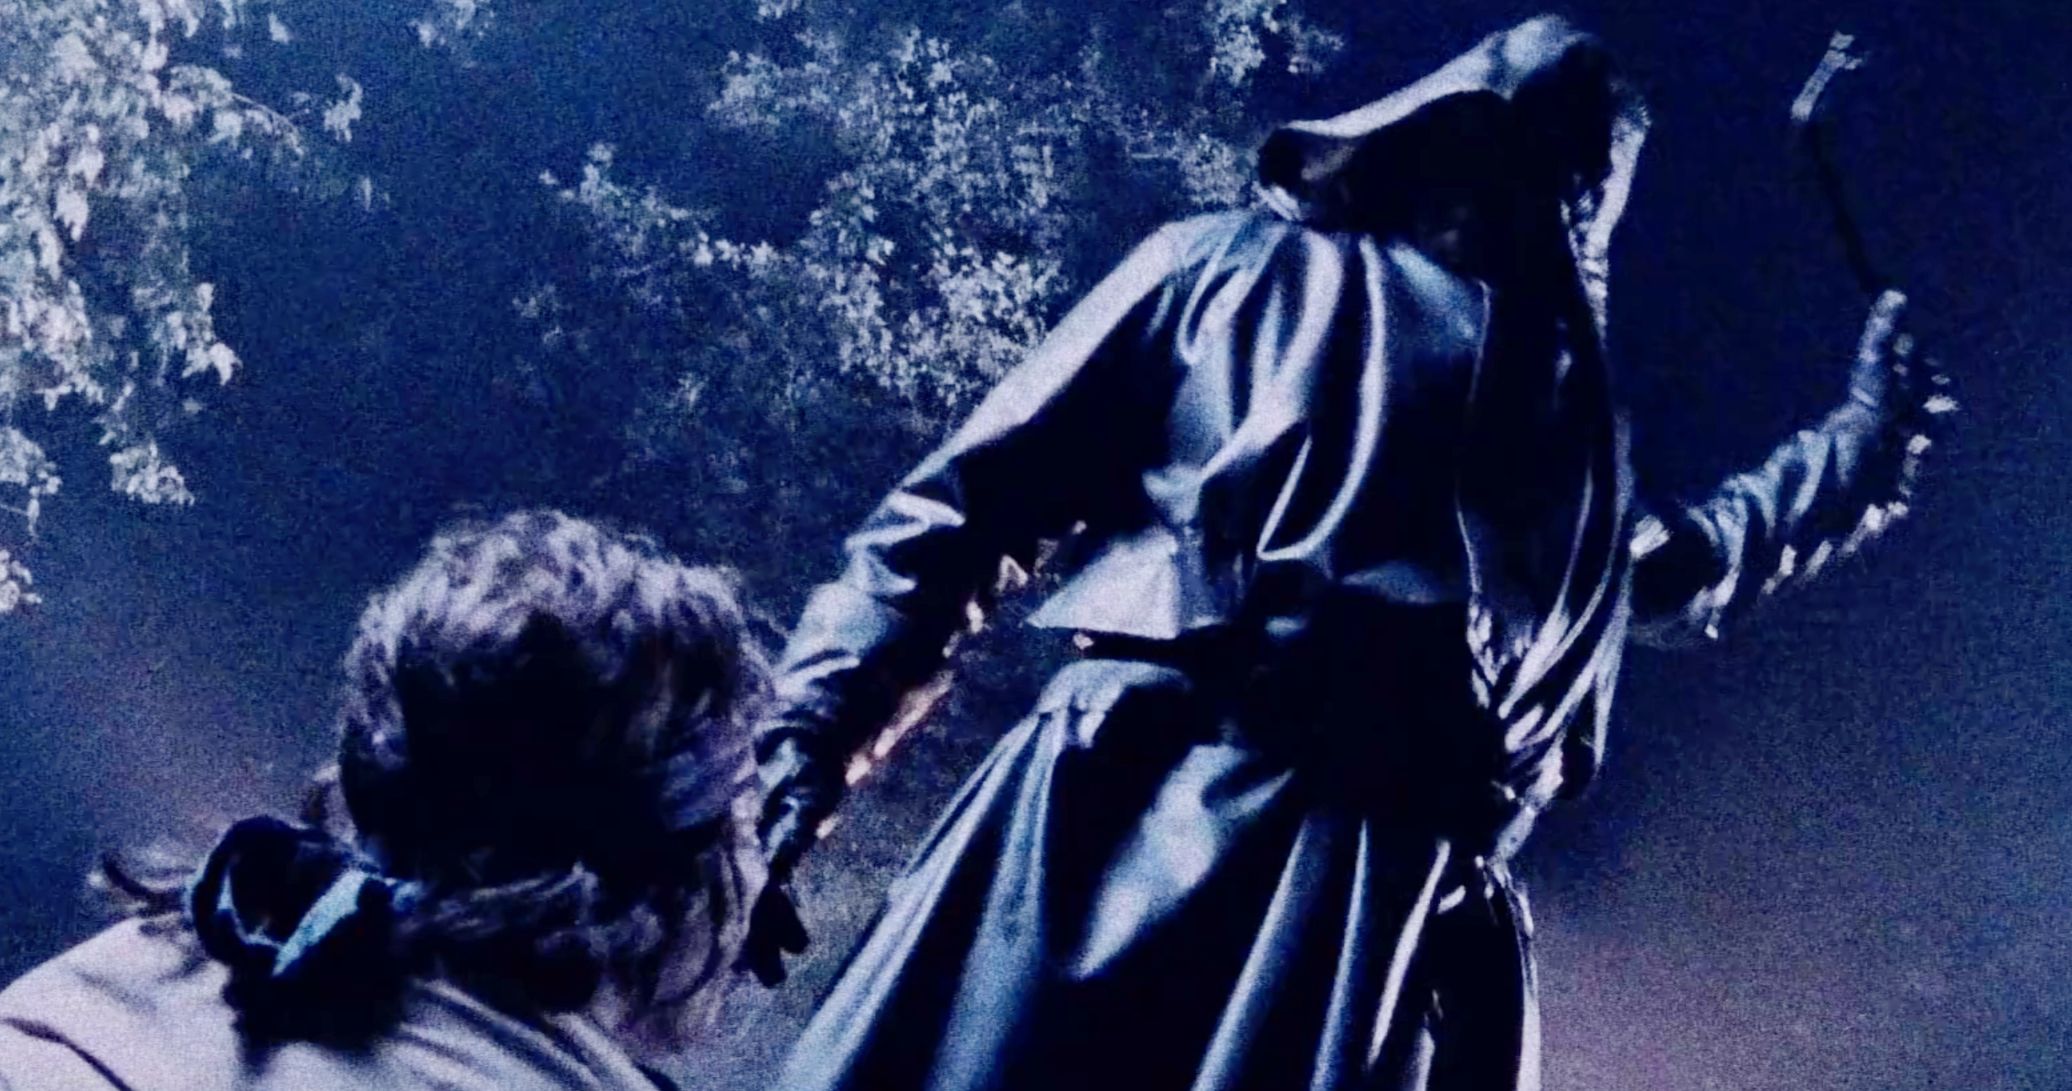 Full American Horror Story: 1984 Trailer Unleashes an '80s Slasher Nightmare